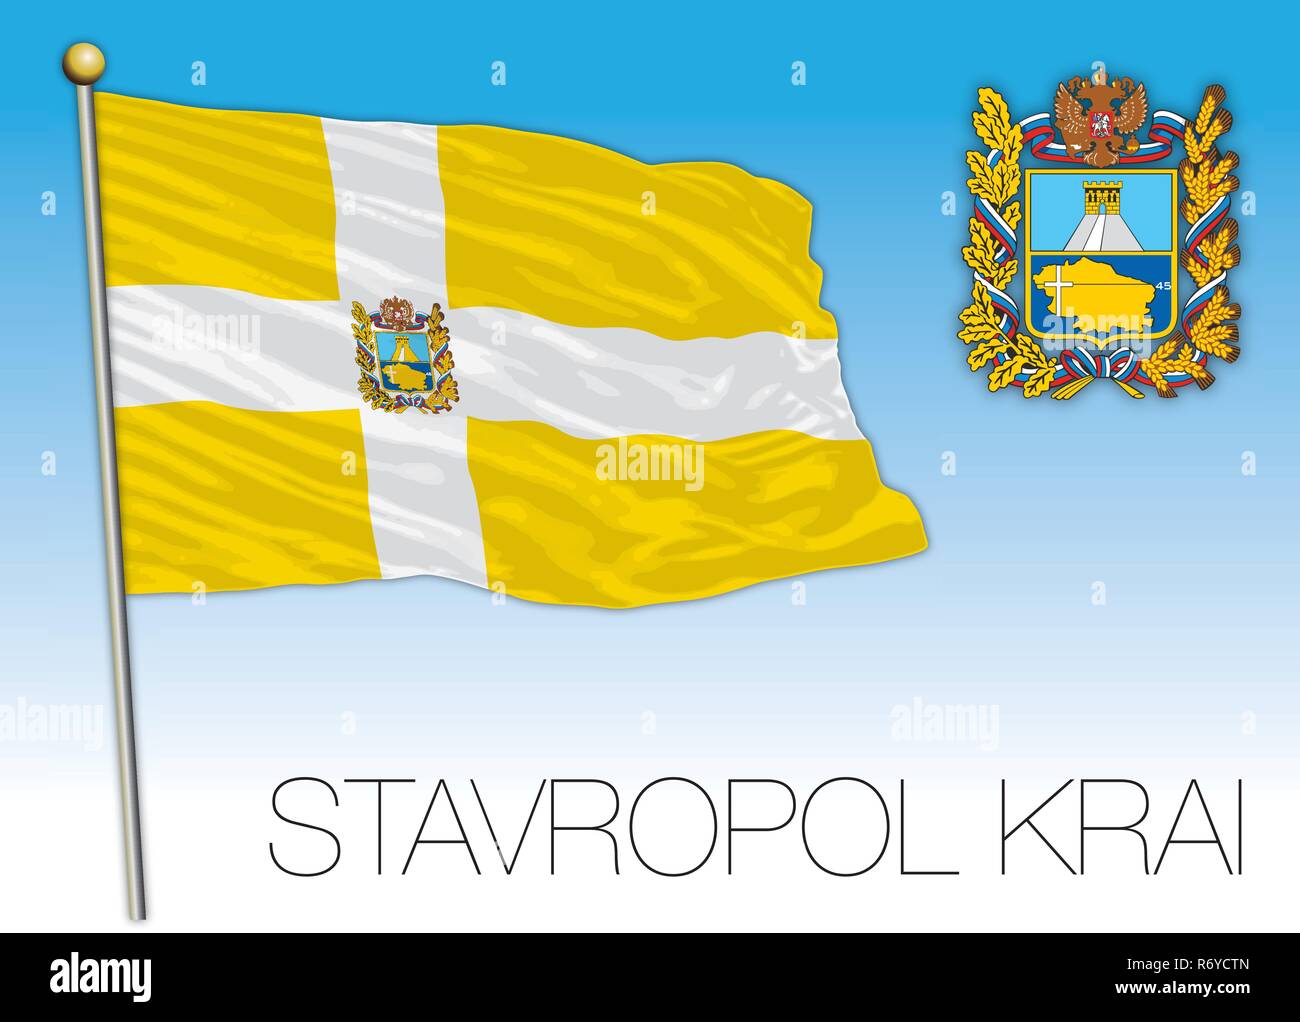 Stavropol krai flag, Russian Federation, vector illustration Stock Vector